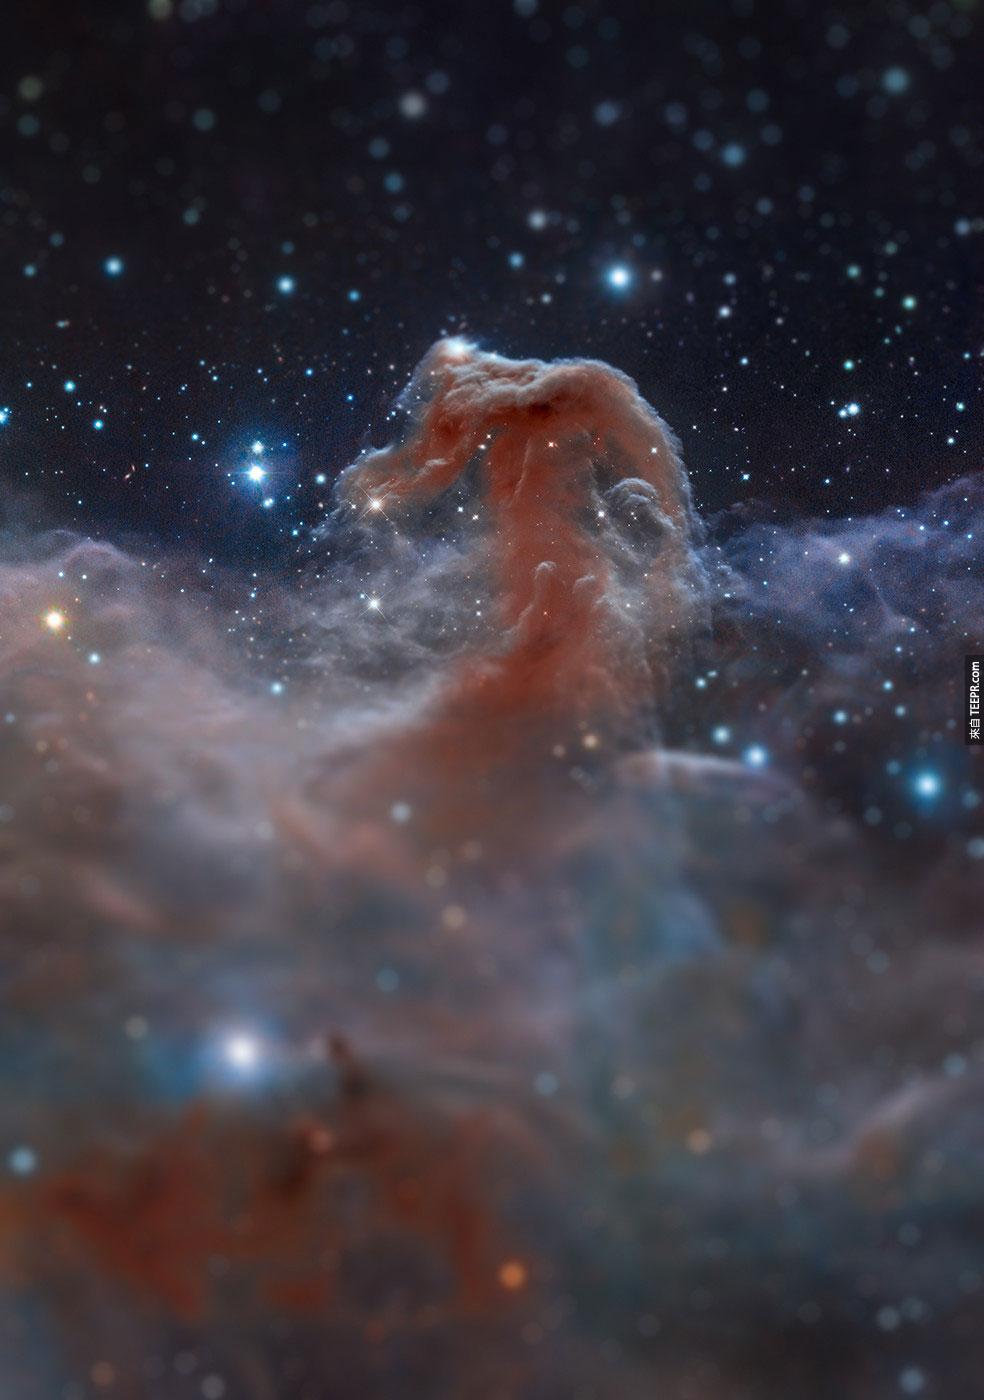 1. 马头星云 (Horsehead Nebula)